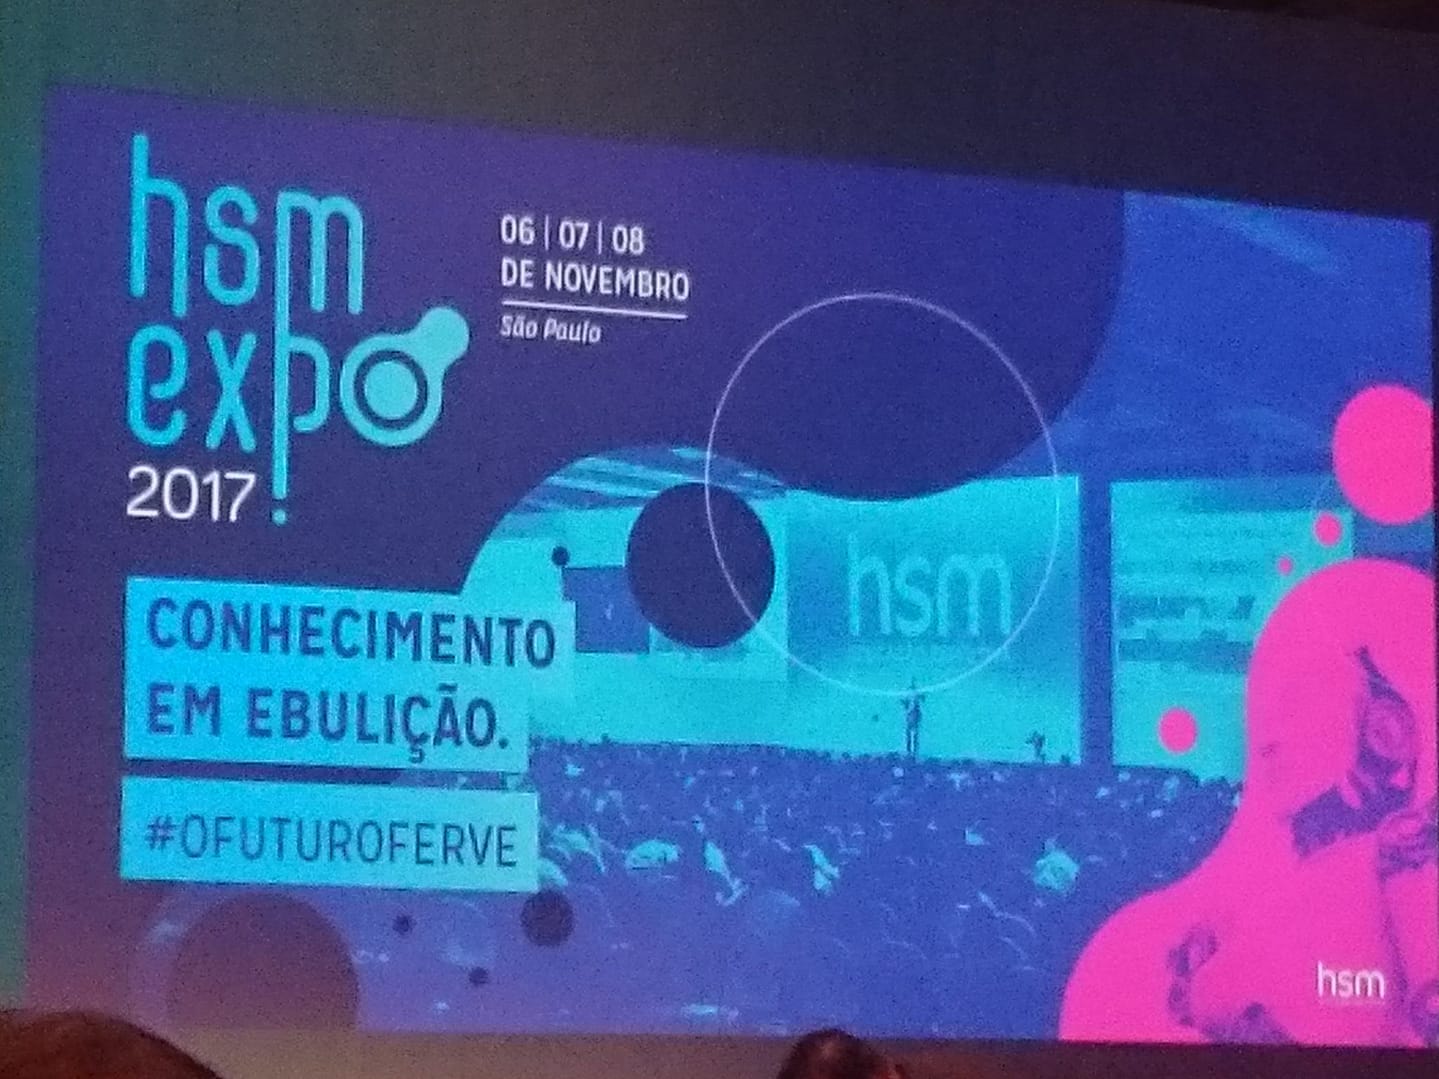 Tema da próxima HSM Expo 2017